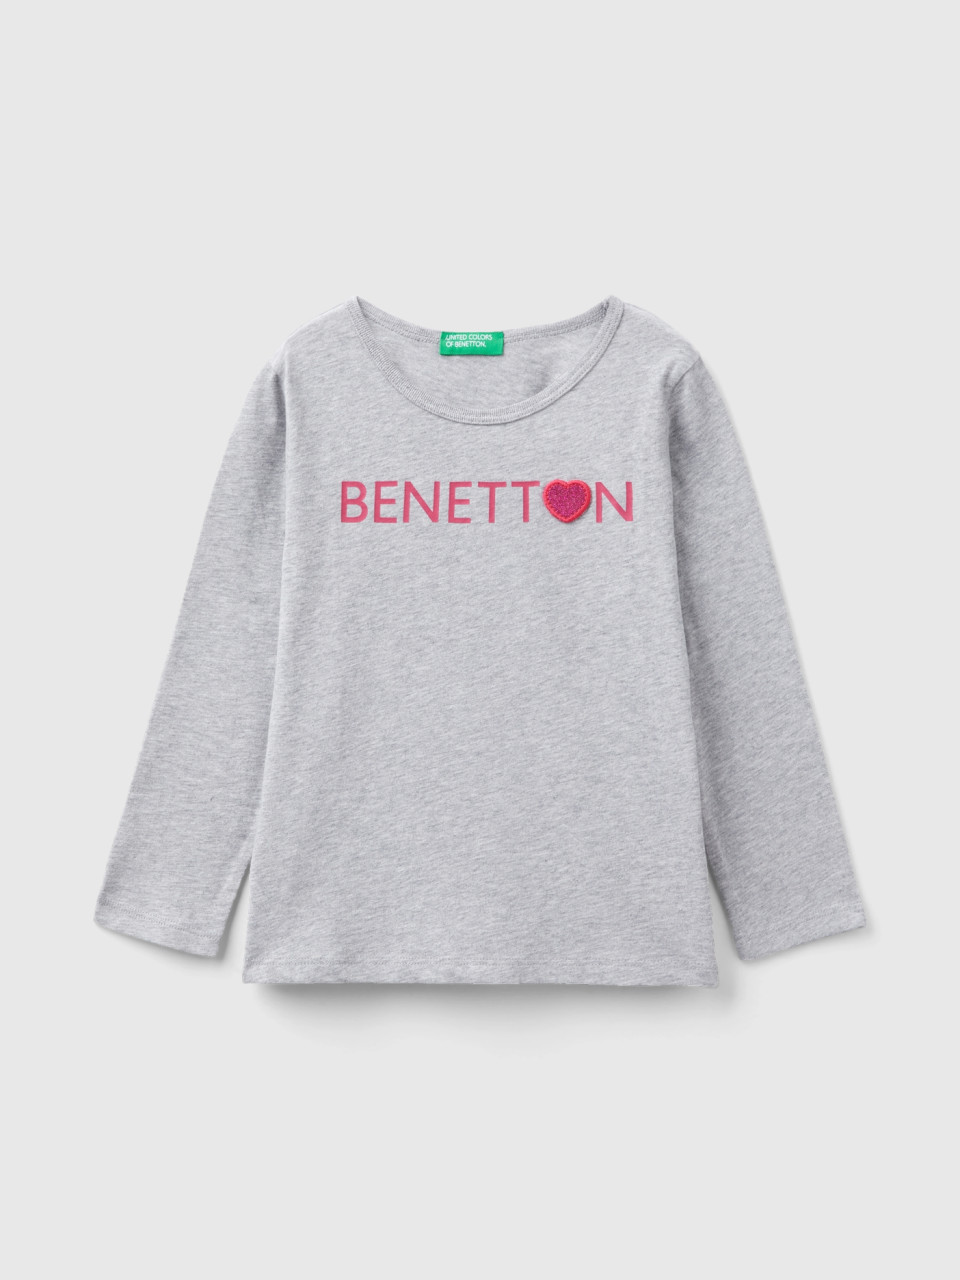 Benetton, Organic Cotton T-shirt With Glittery Print, Light Gray, Kids